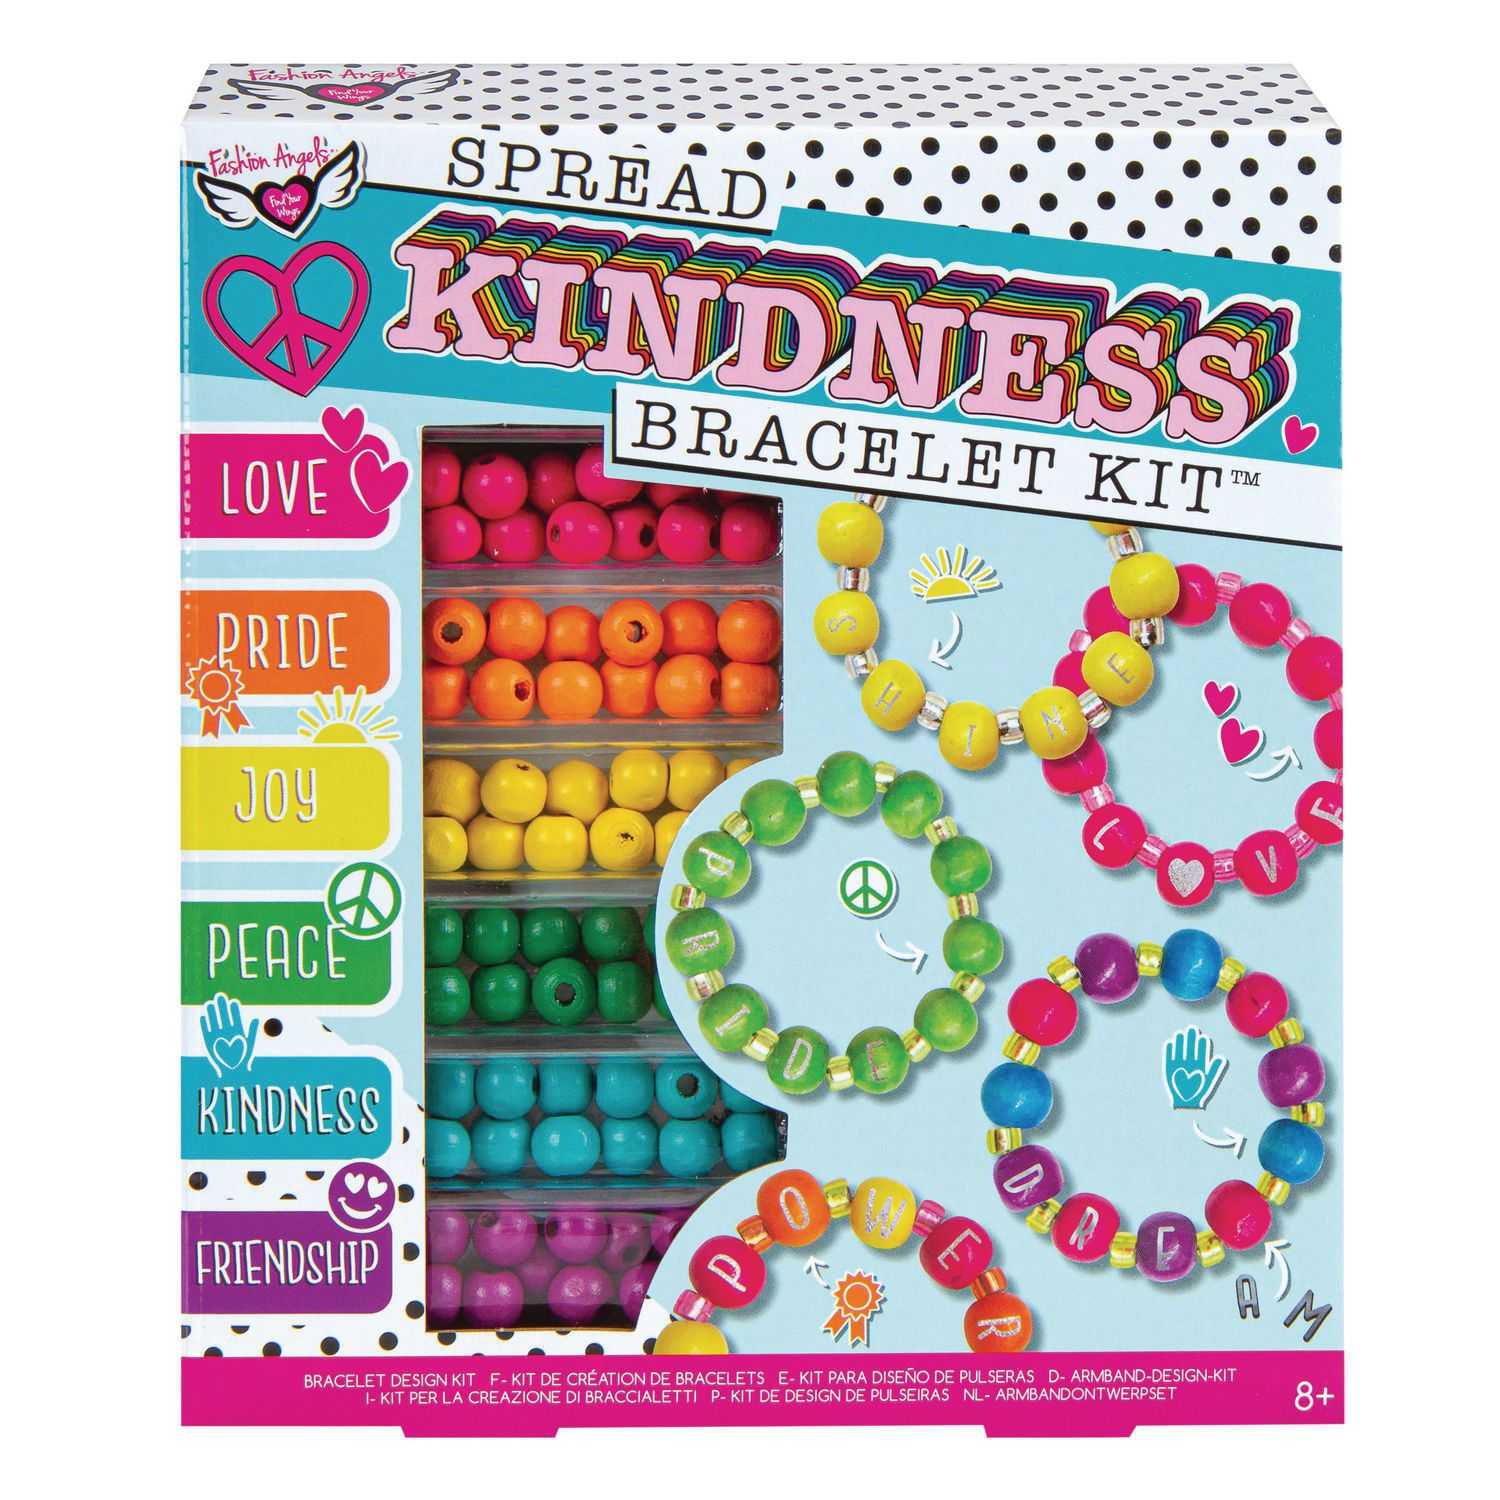 Fashion Angels Spread Kindness Bracelet Kit